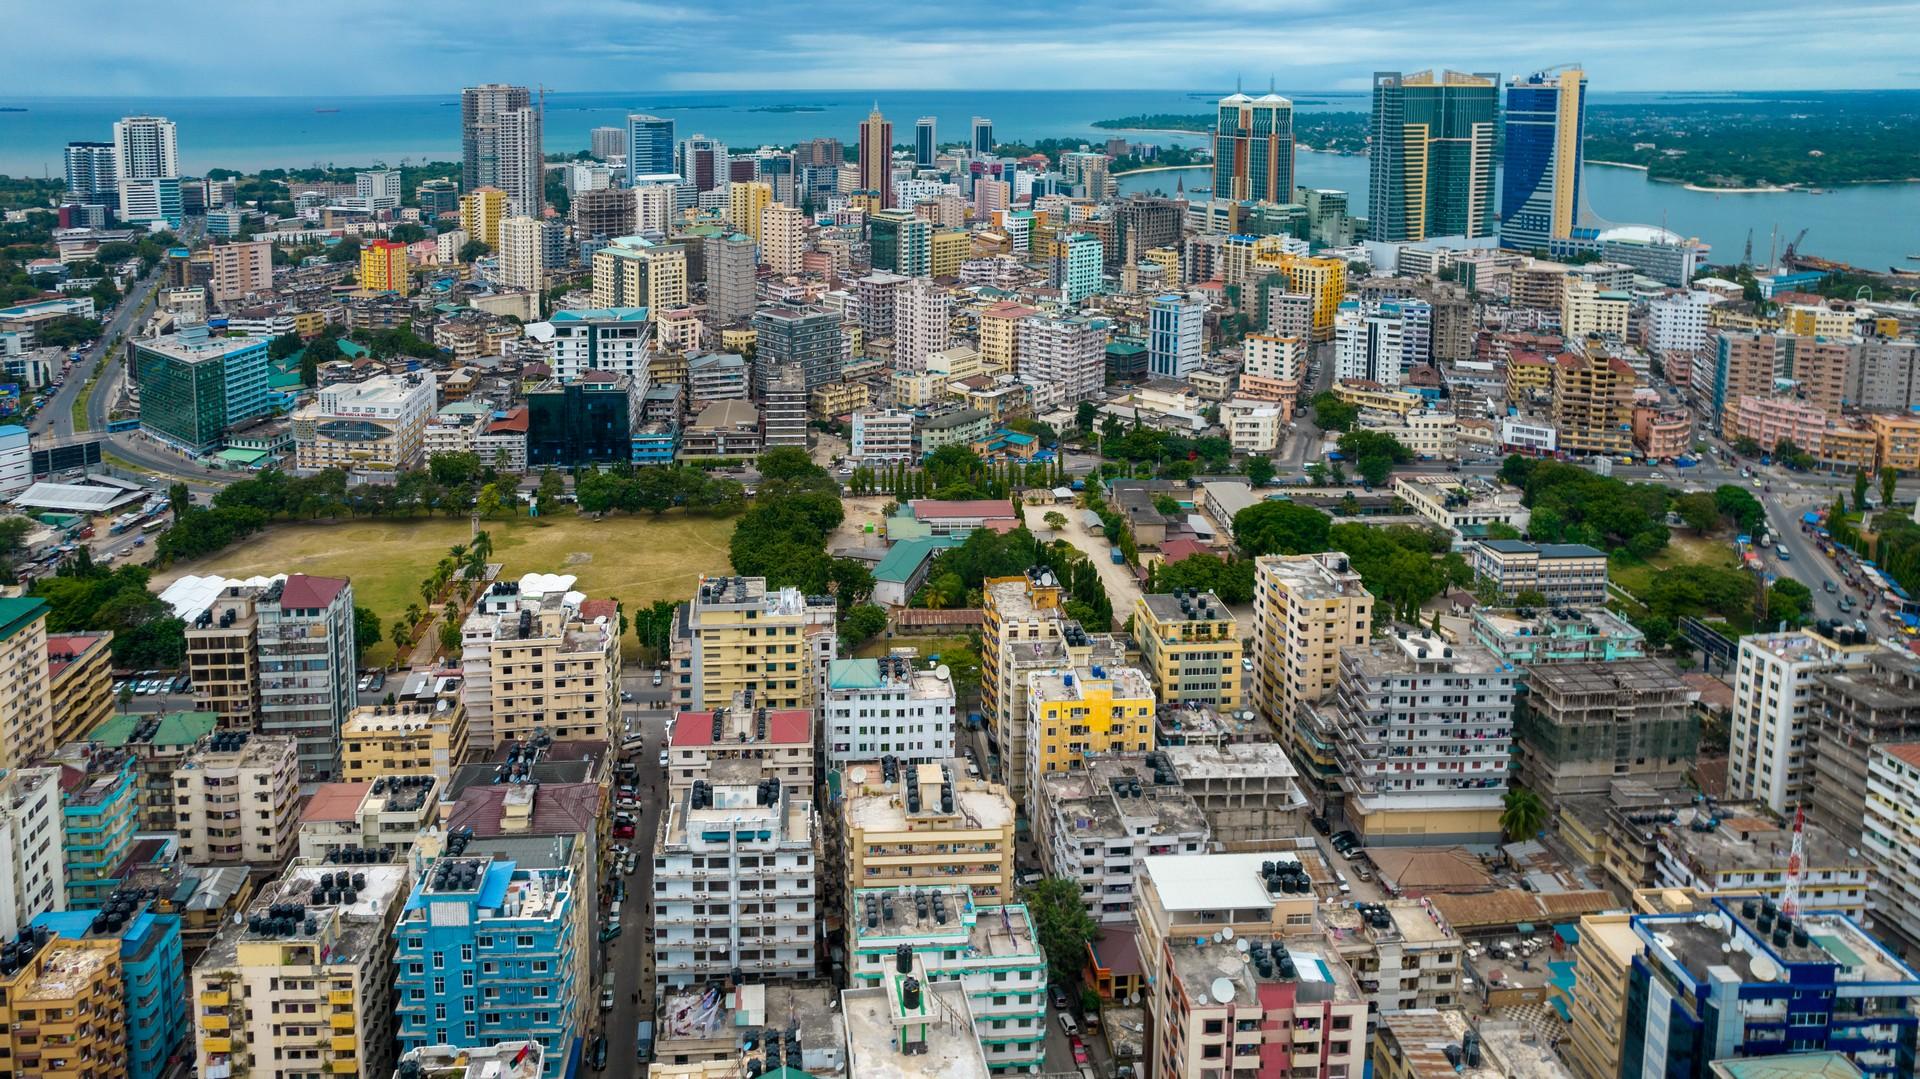 Aerial view of architecture in Dar es Salaam